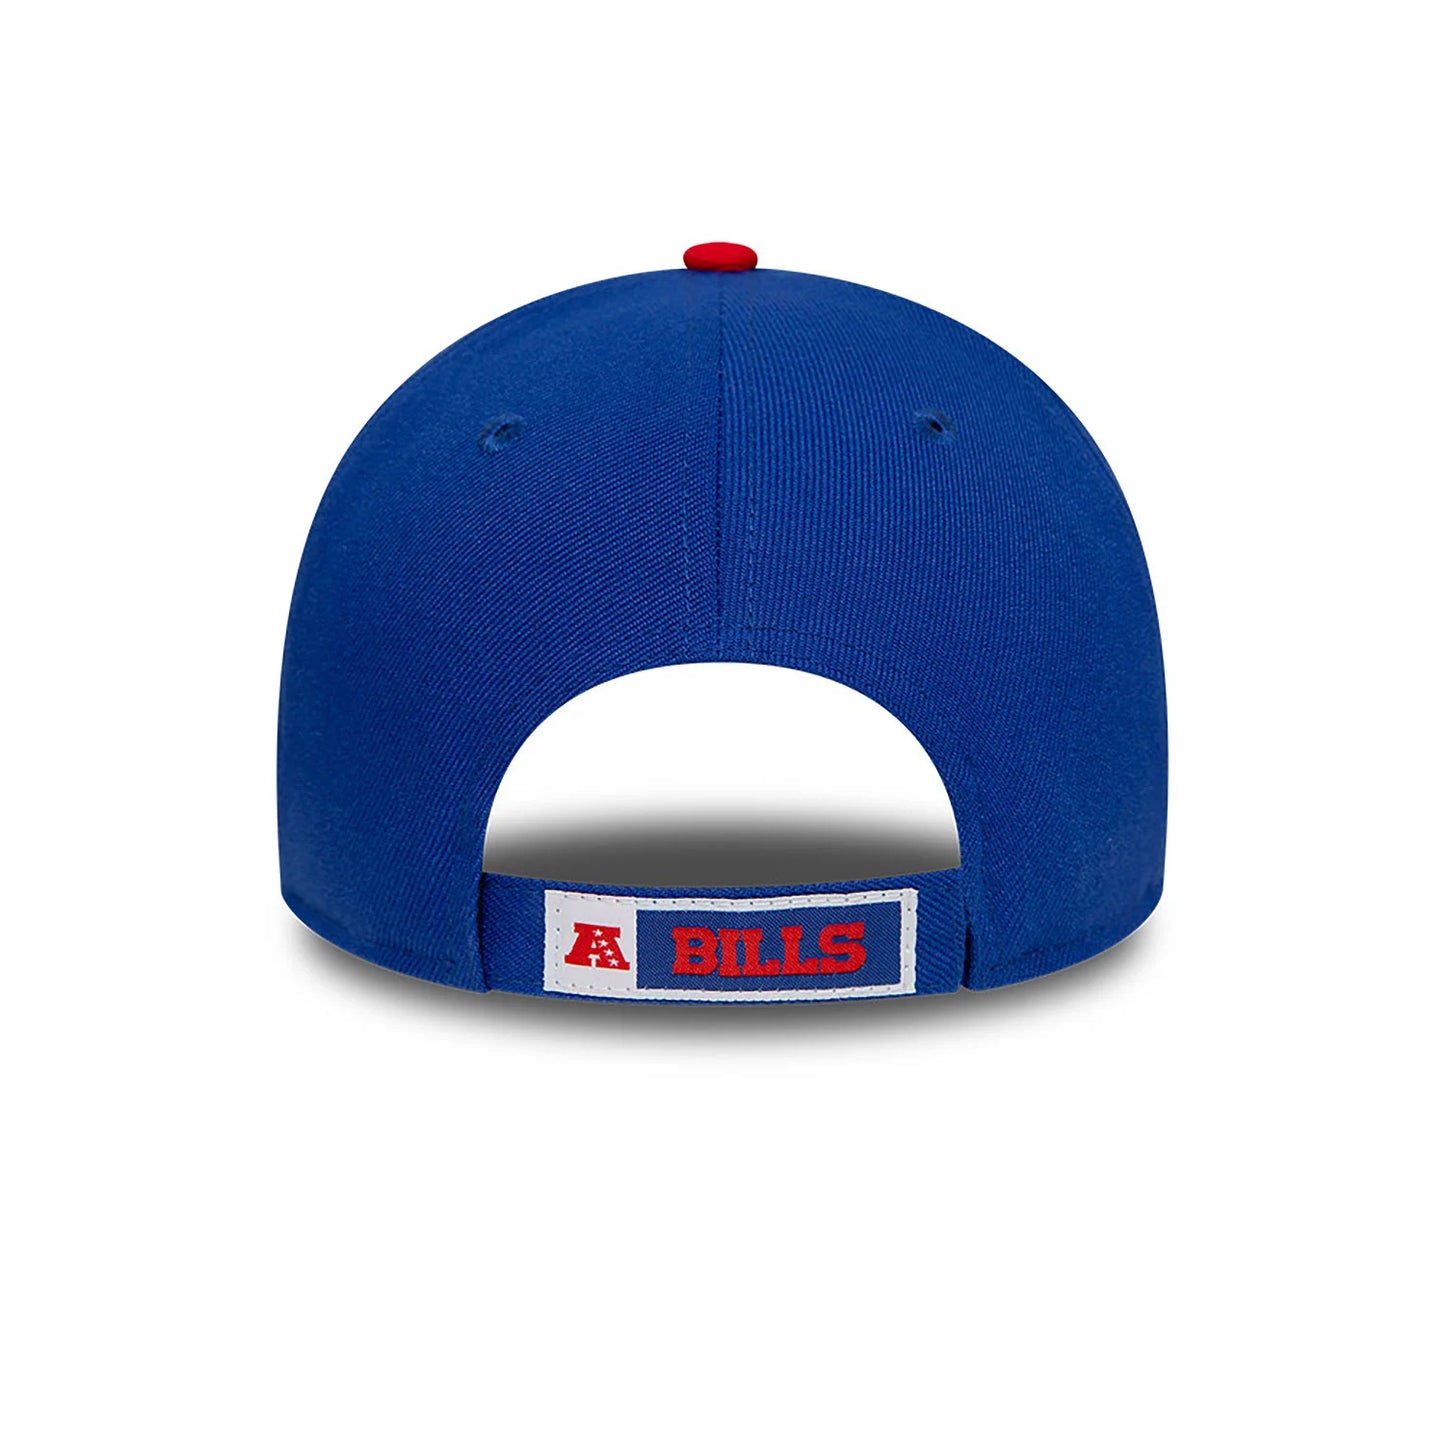 Buffalo Bills gorra azul y rojo  9FORTY NFL visera curva